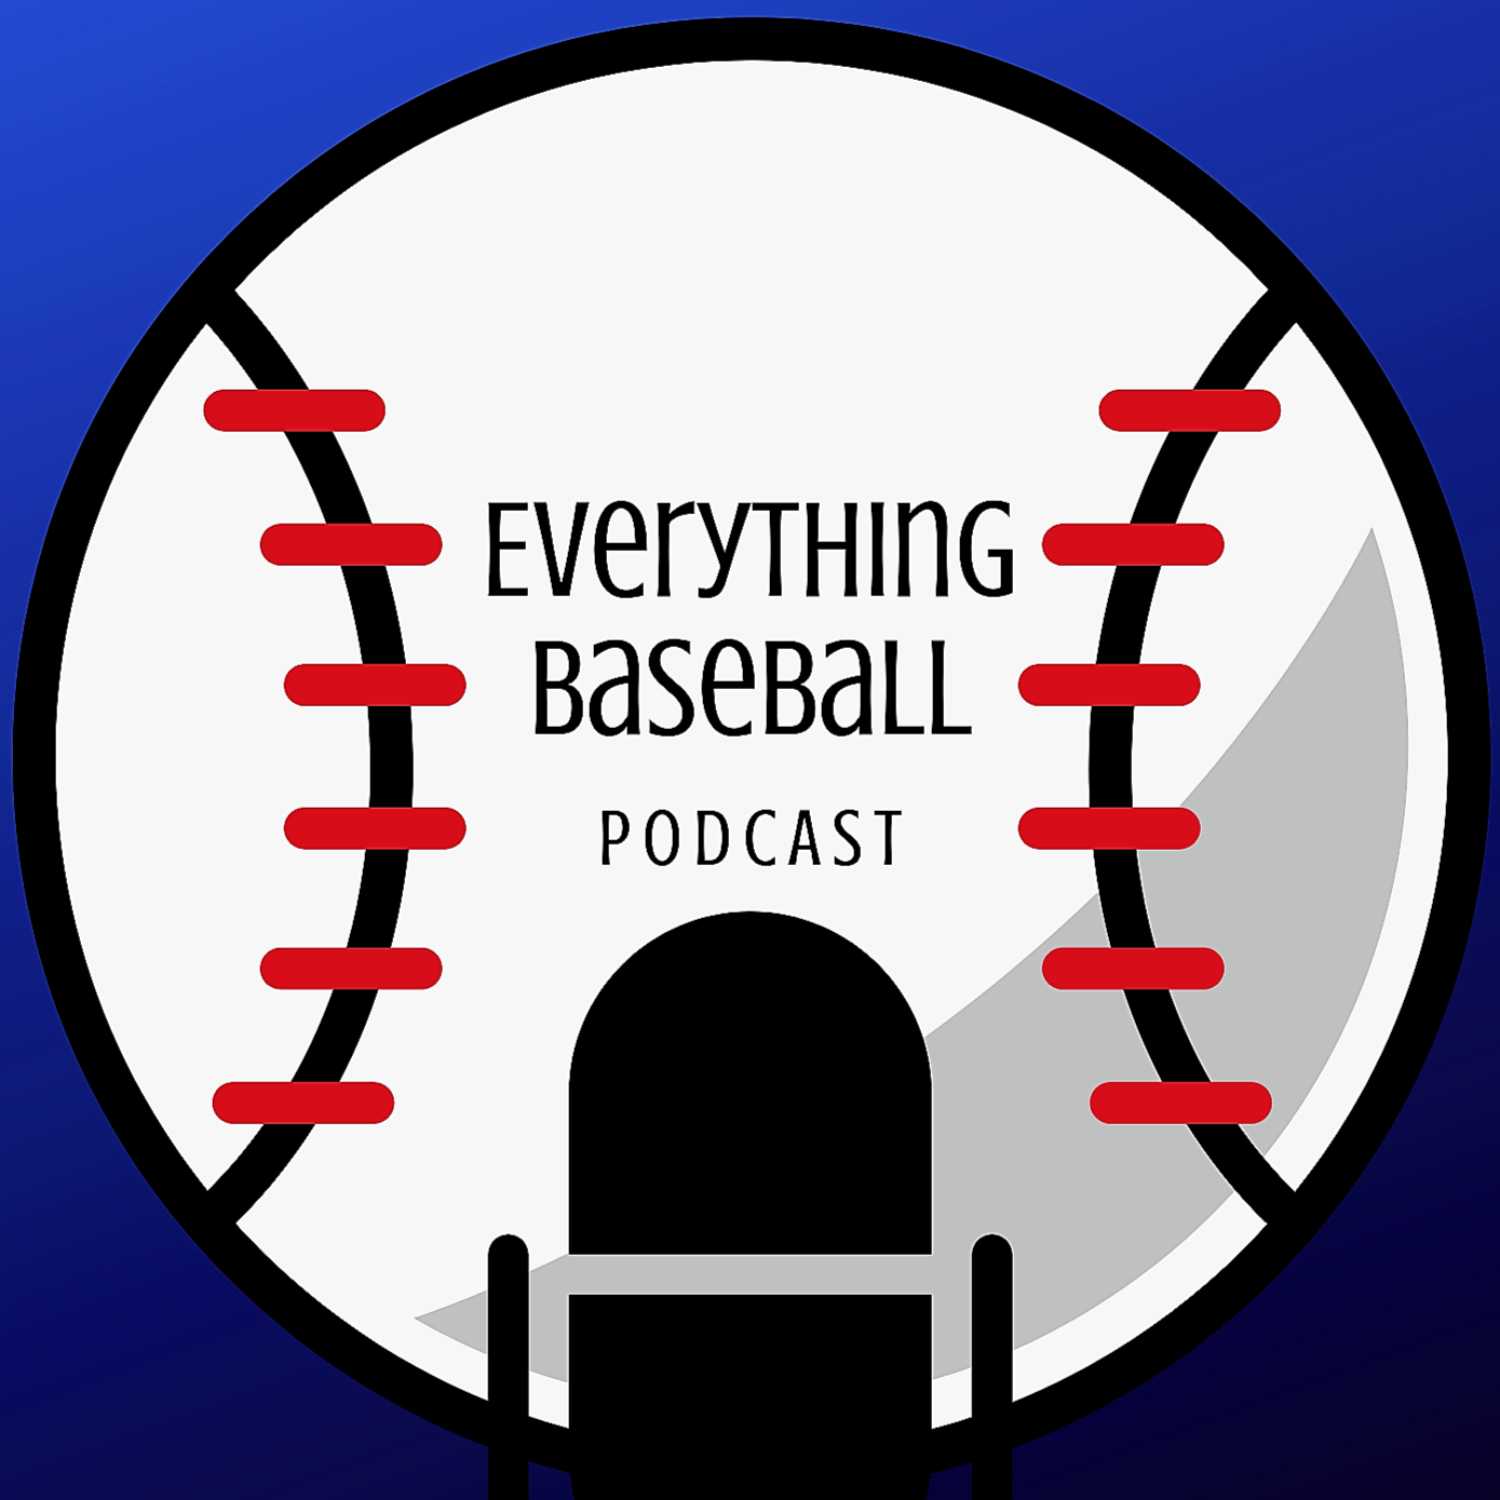 Everything Baseball Podcast episode 1- gearing up for the 2021 baseball season